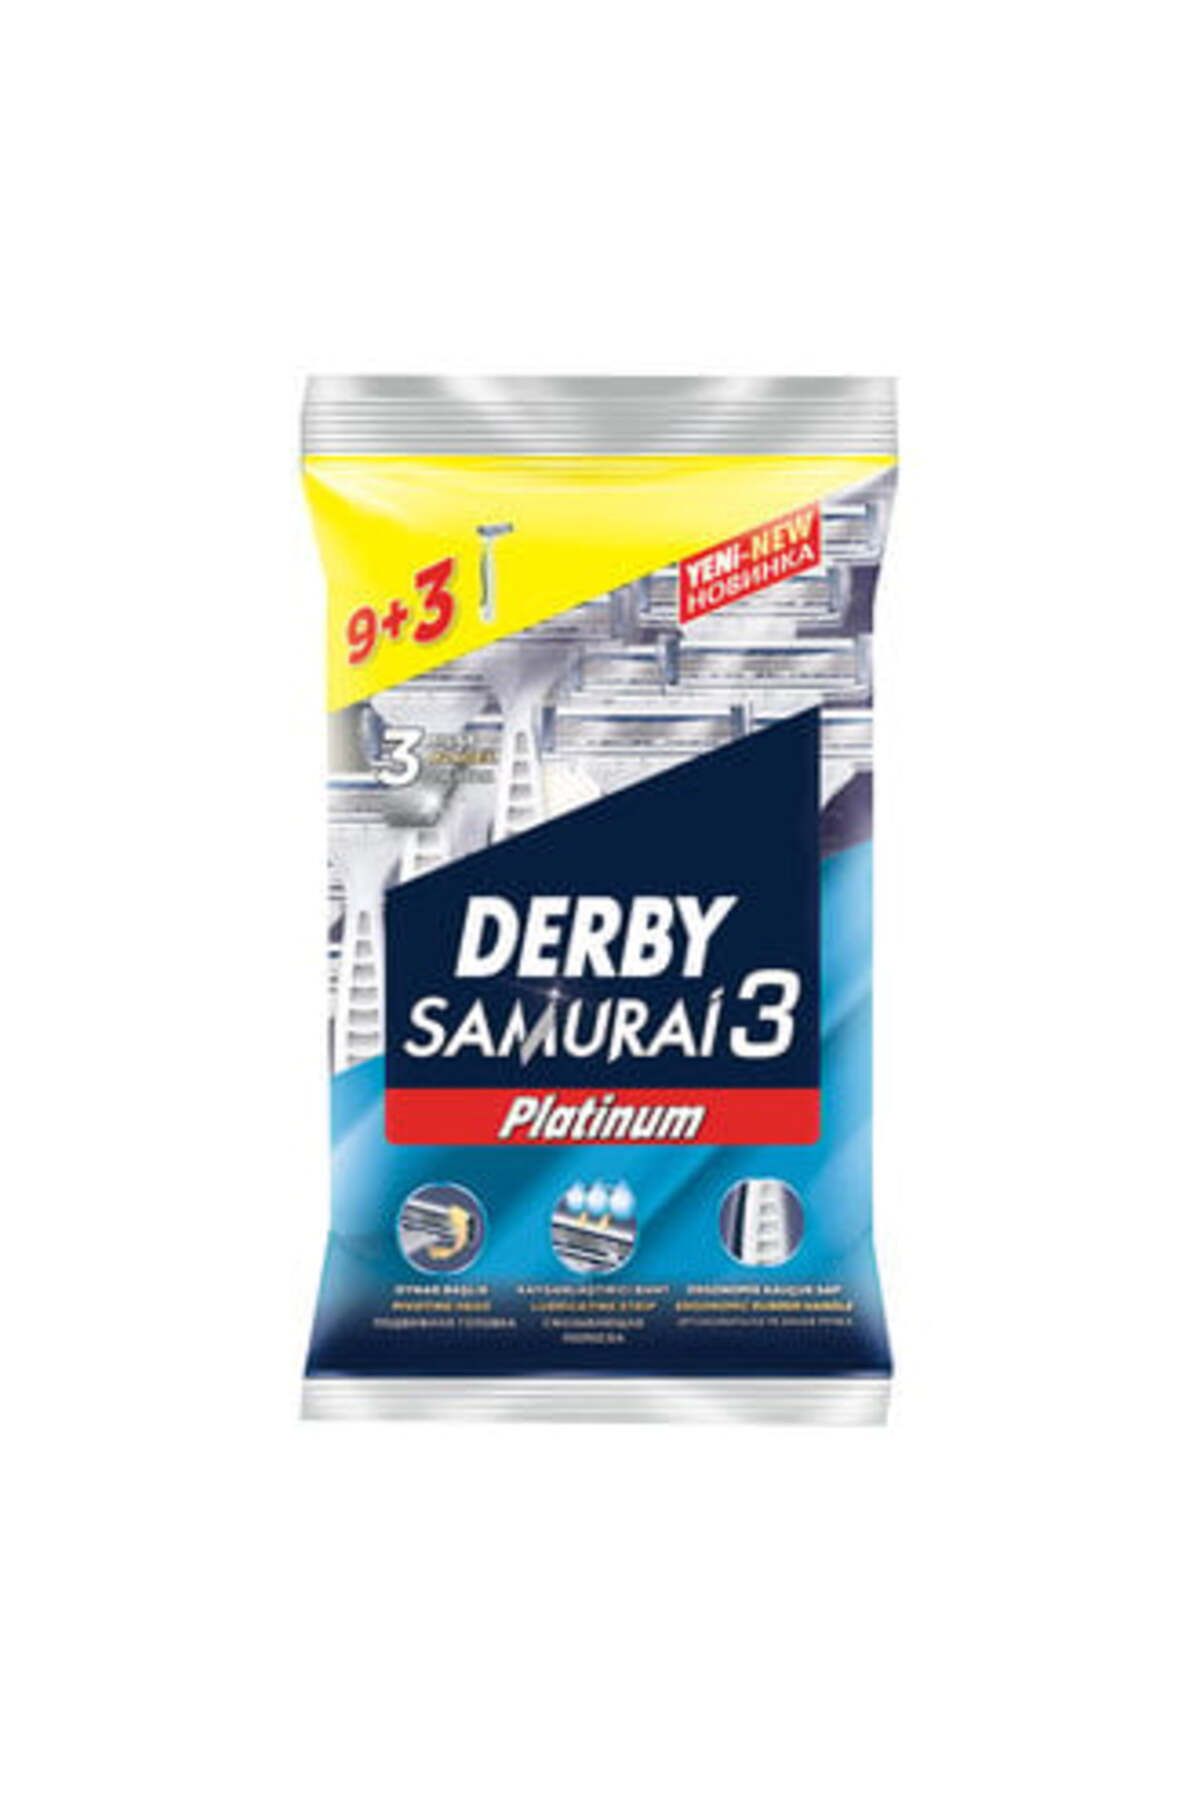 Derby Samurai 3 Platinum 9+3 Poşet ( 1 ADET )